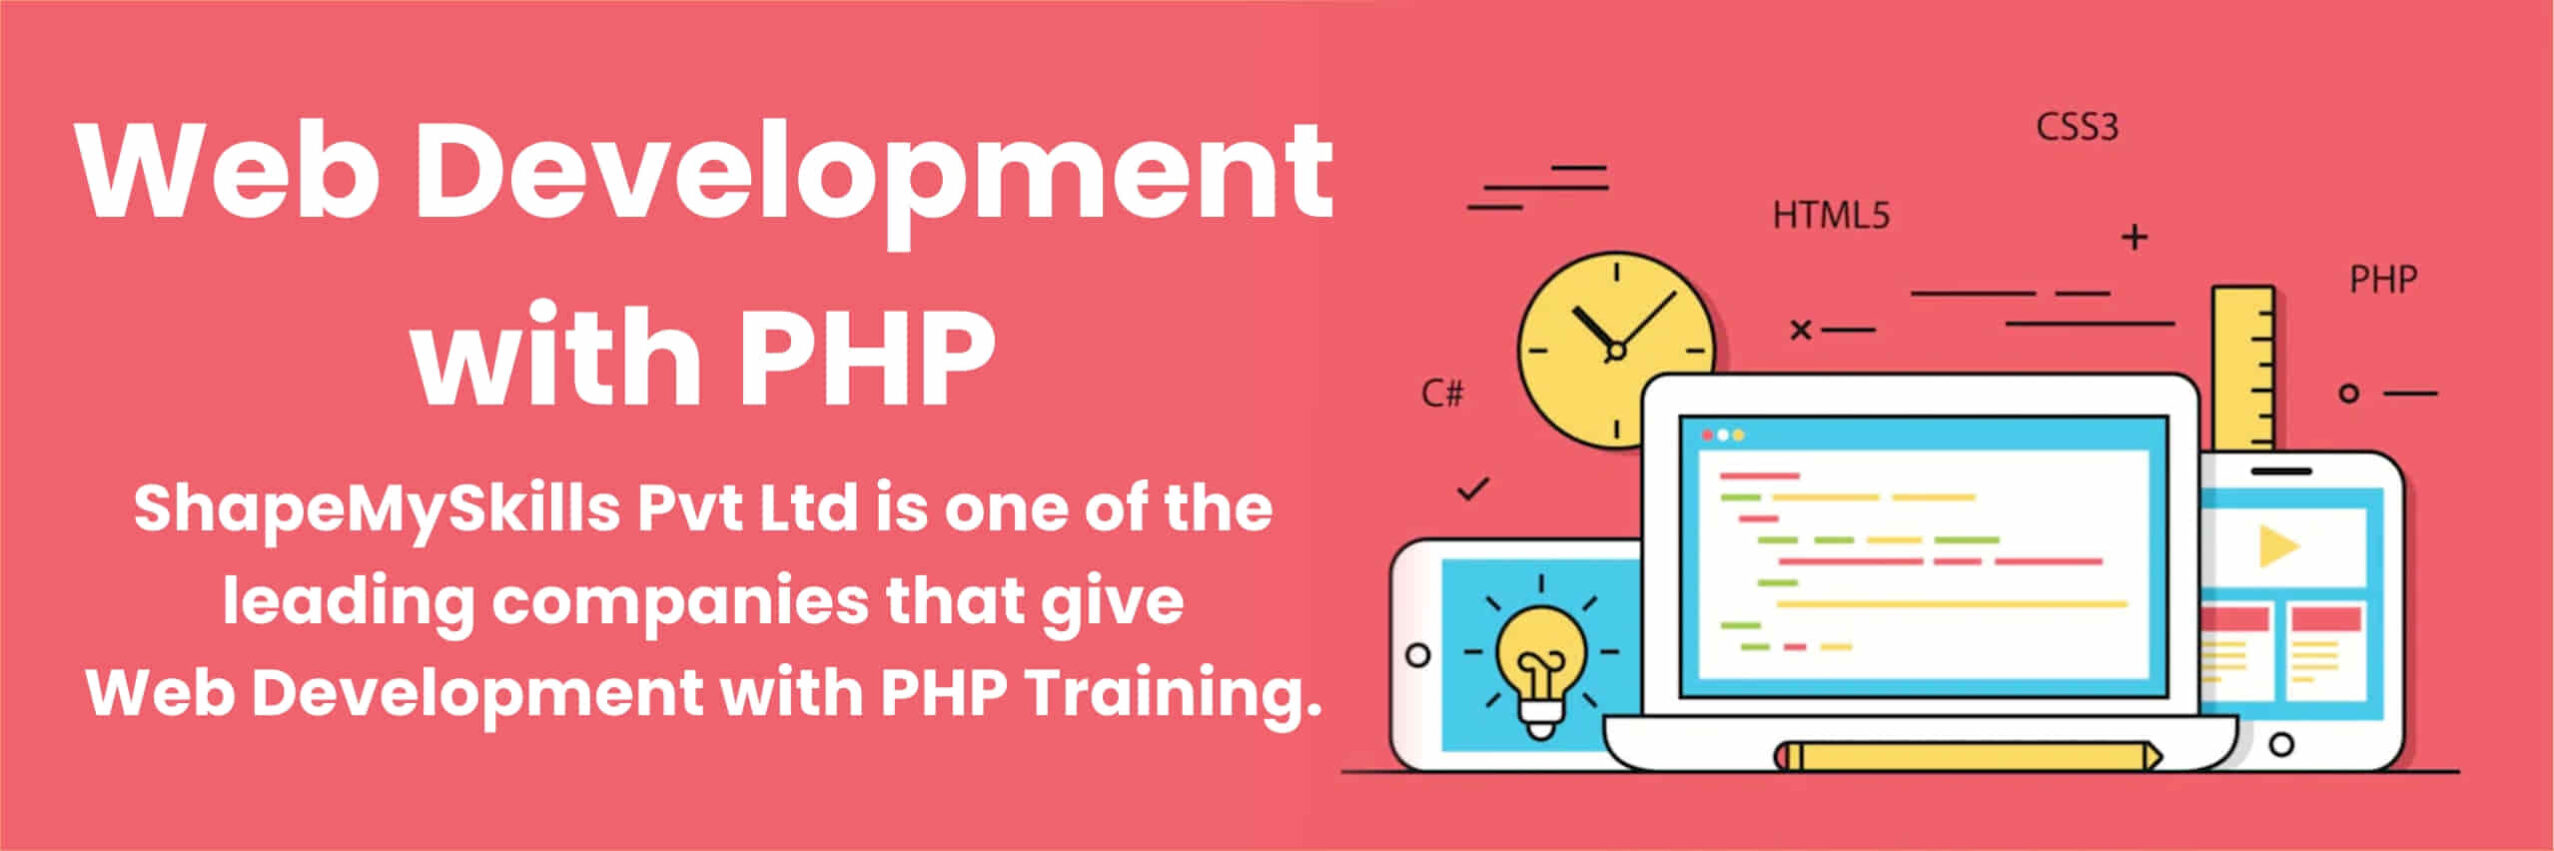 PHP Web Development Online Training PHP Web Development Training in Noida PHP Web Development Training in Delhi